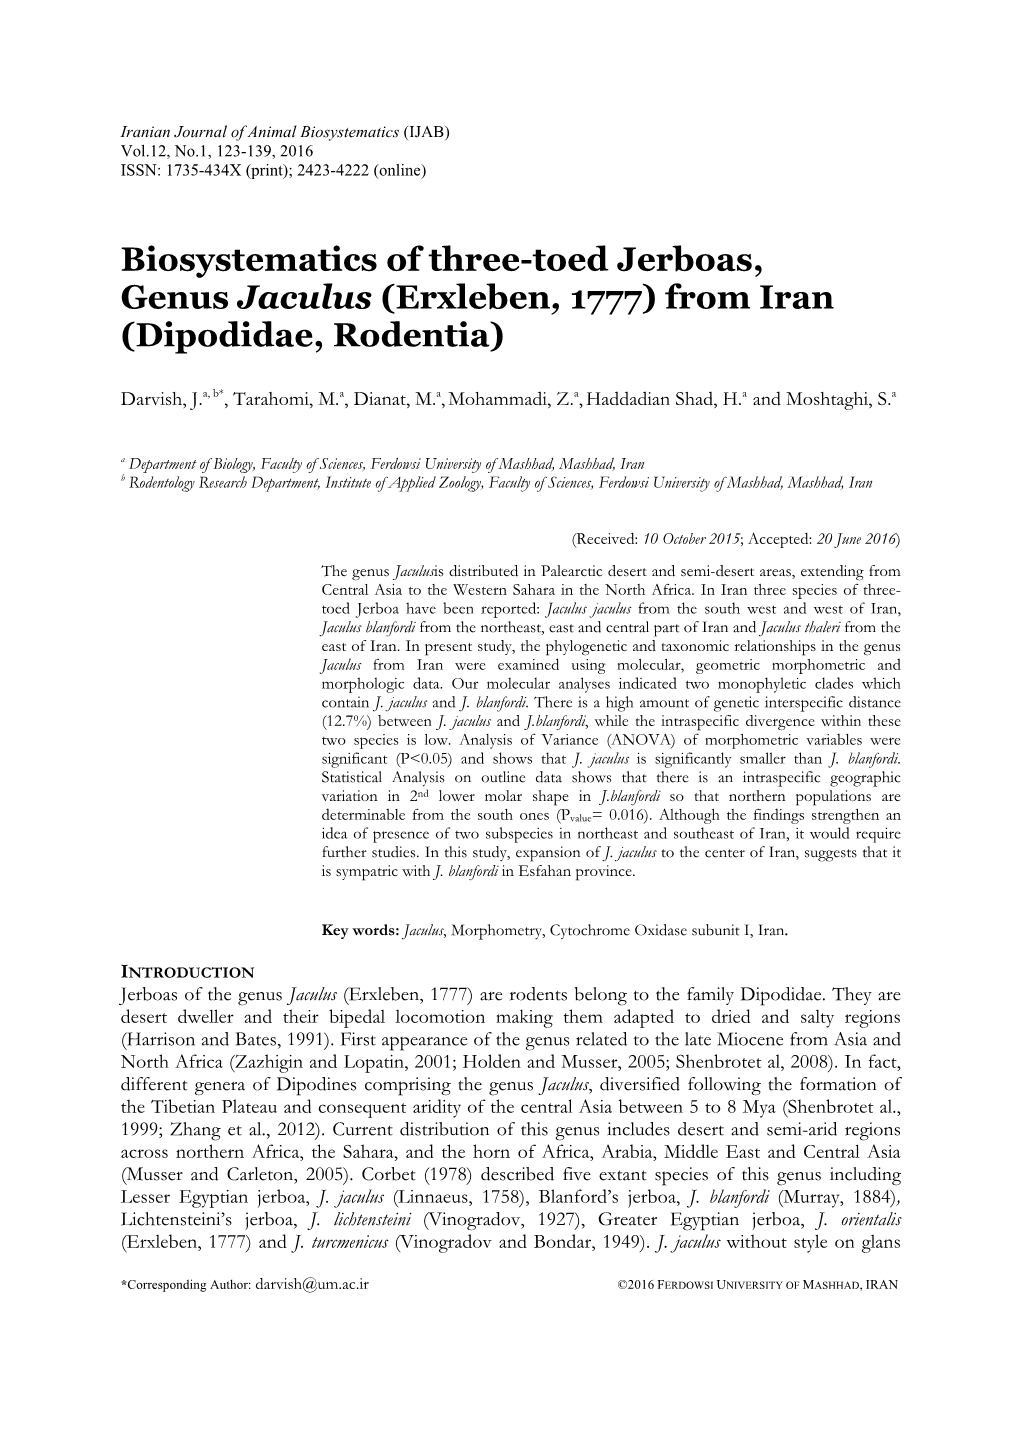 Biosystematics of Three-Toed Jerboas, Genus Jaculus (Erxleben, 1777) from Iran (Dipodidae, Rodentia)